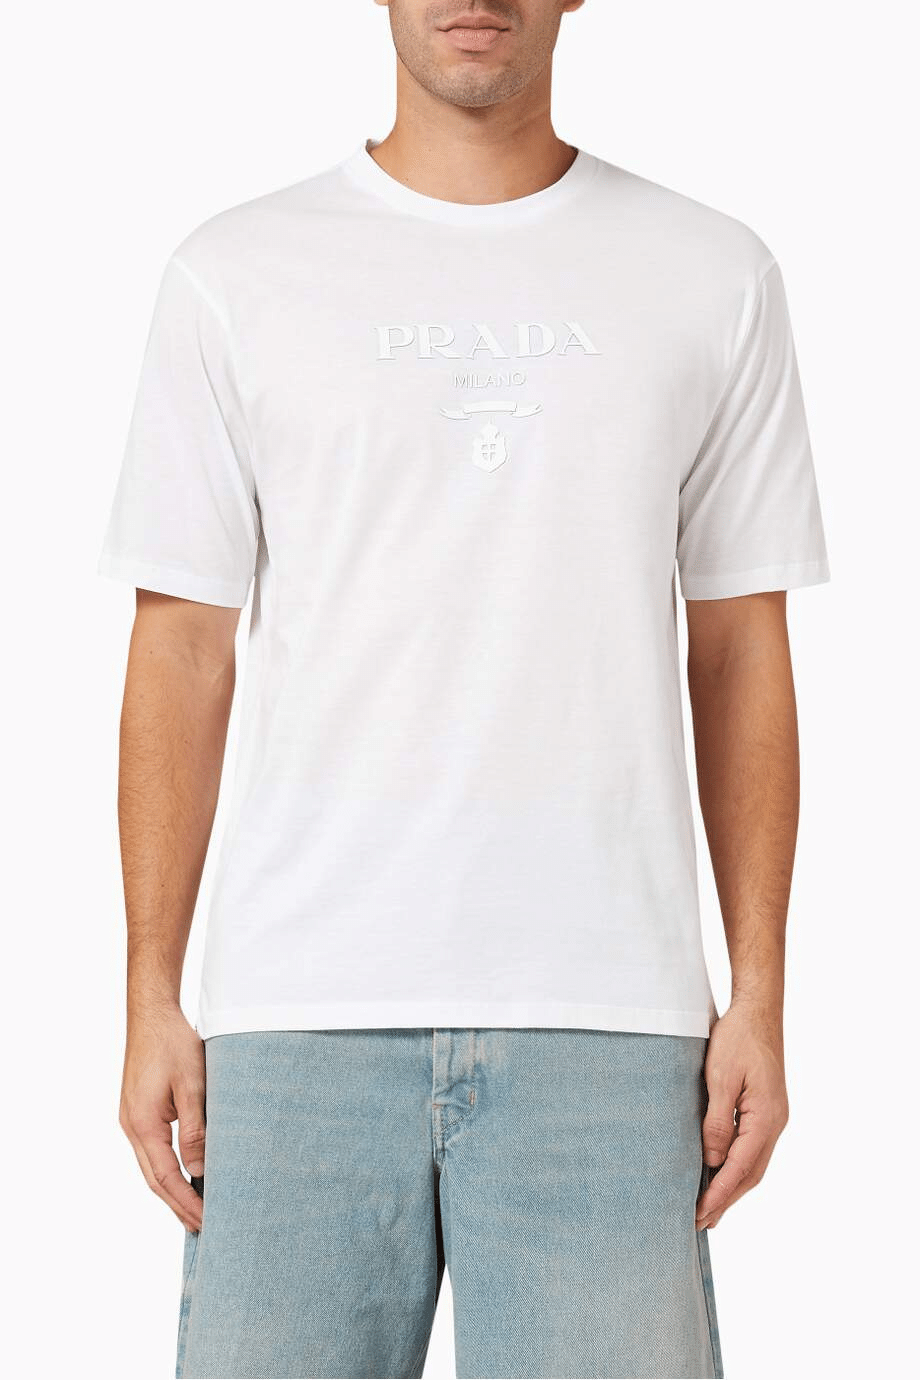 PRADA T-shirt in Cotton Jersey